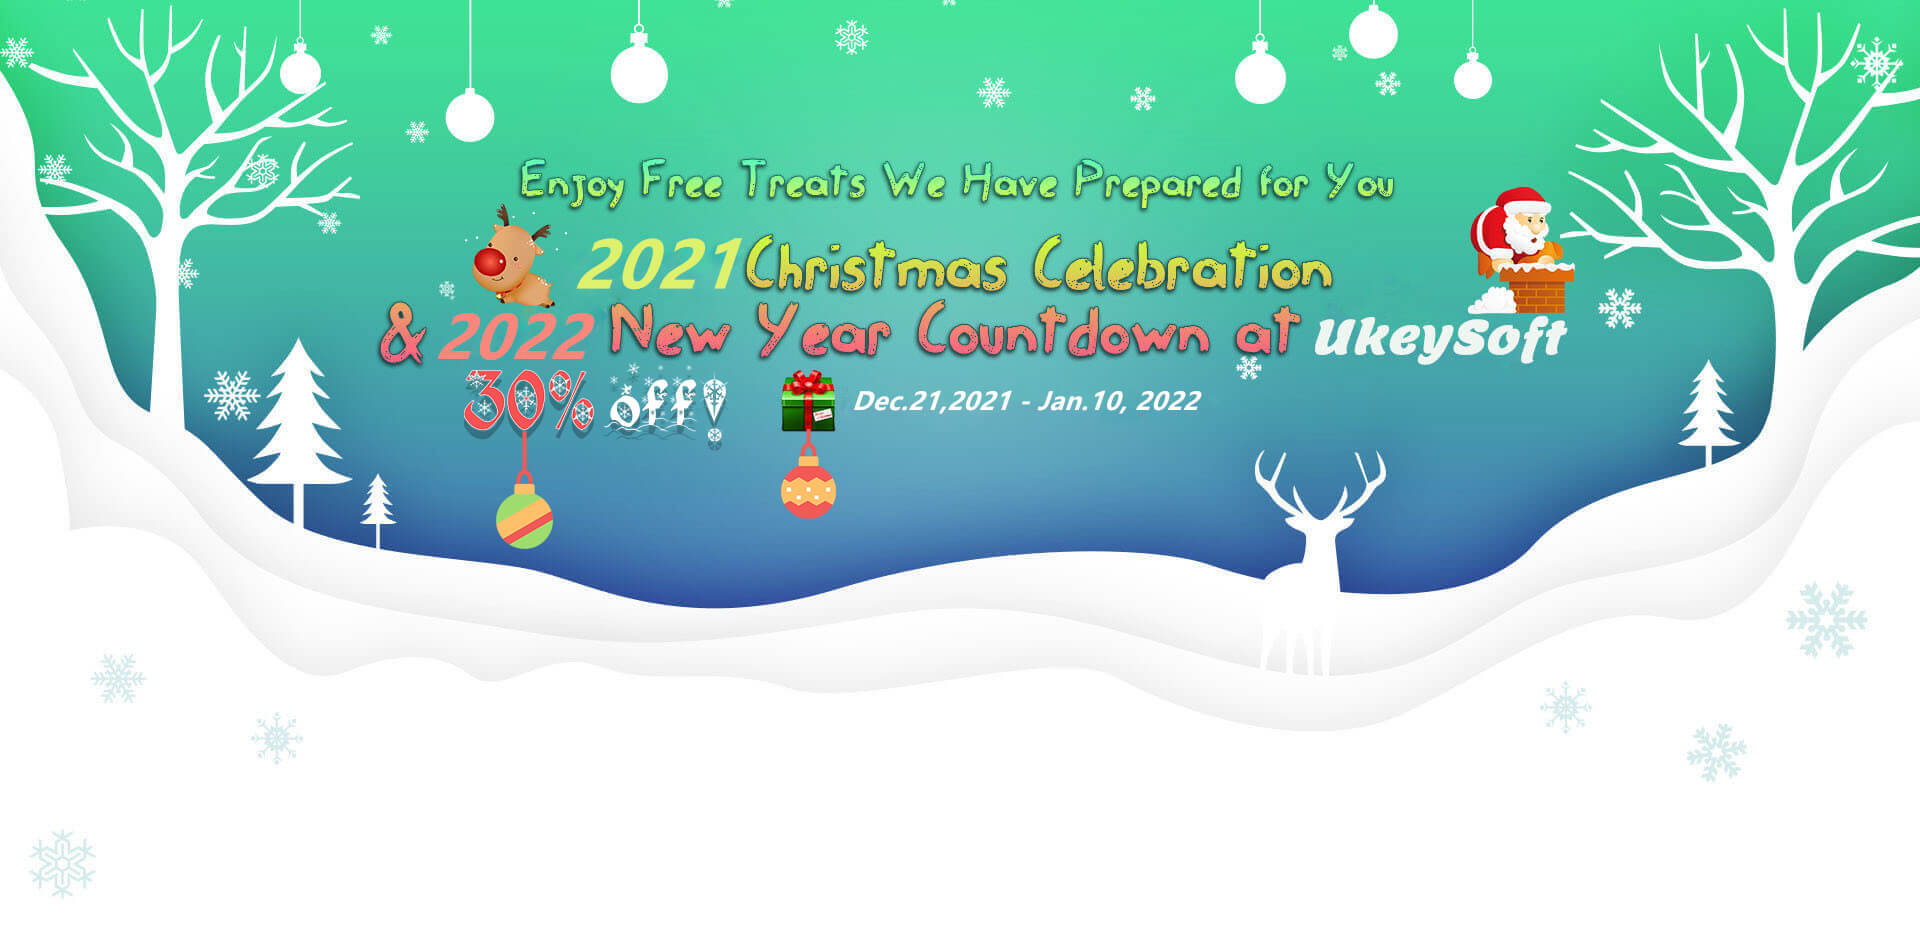 2021 Christmas Celebration & 2020 New Year Countdown at U.fone